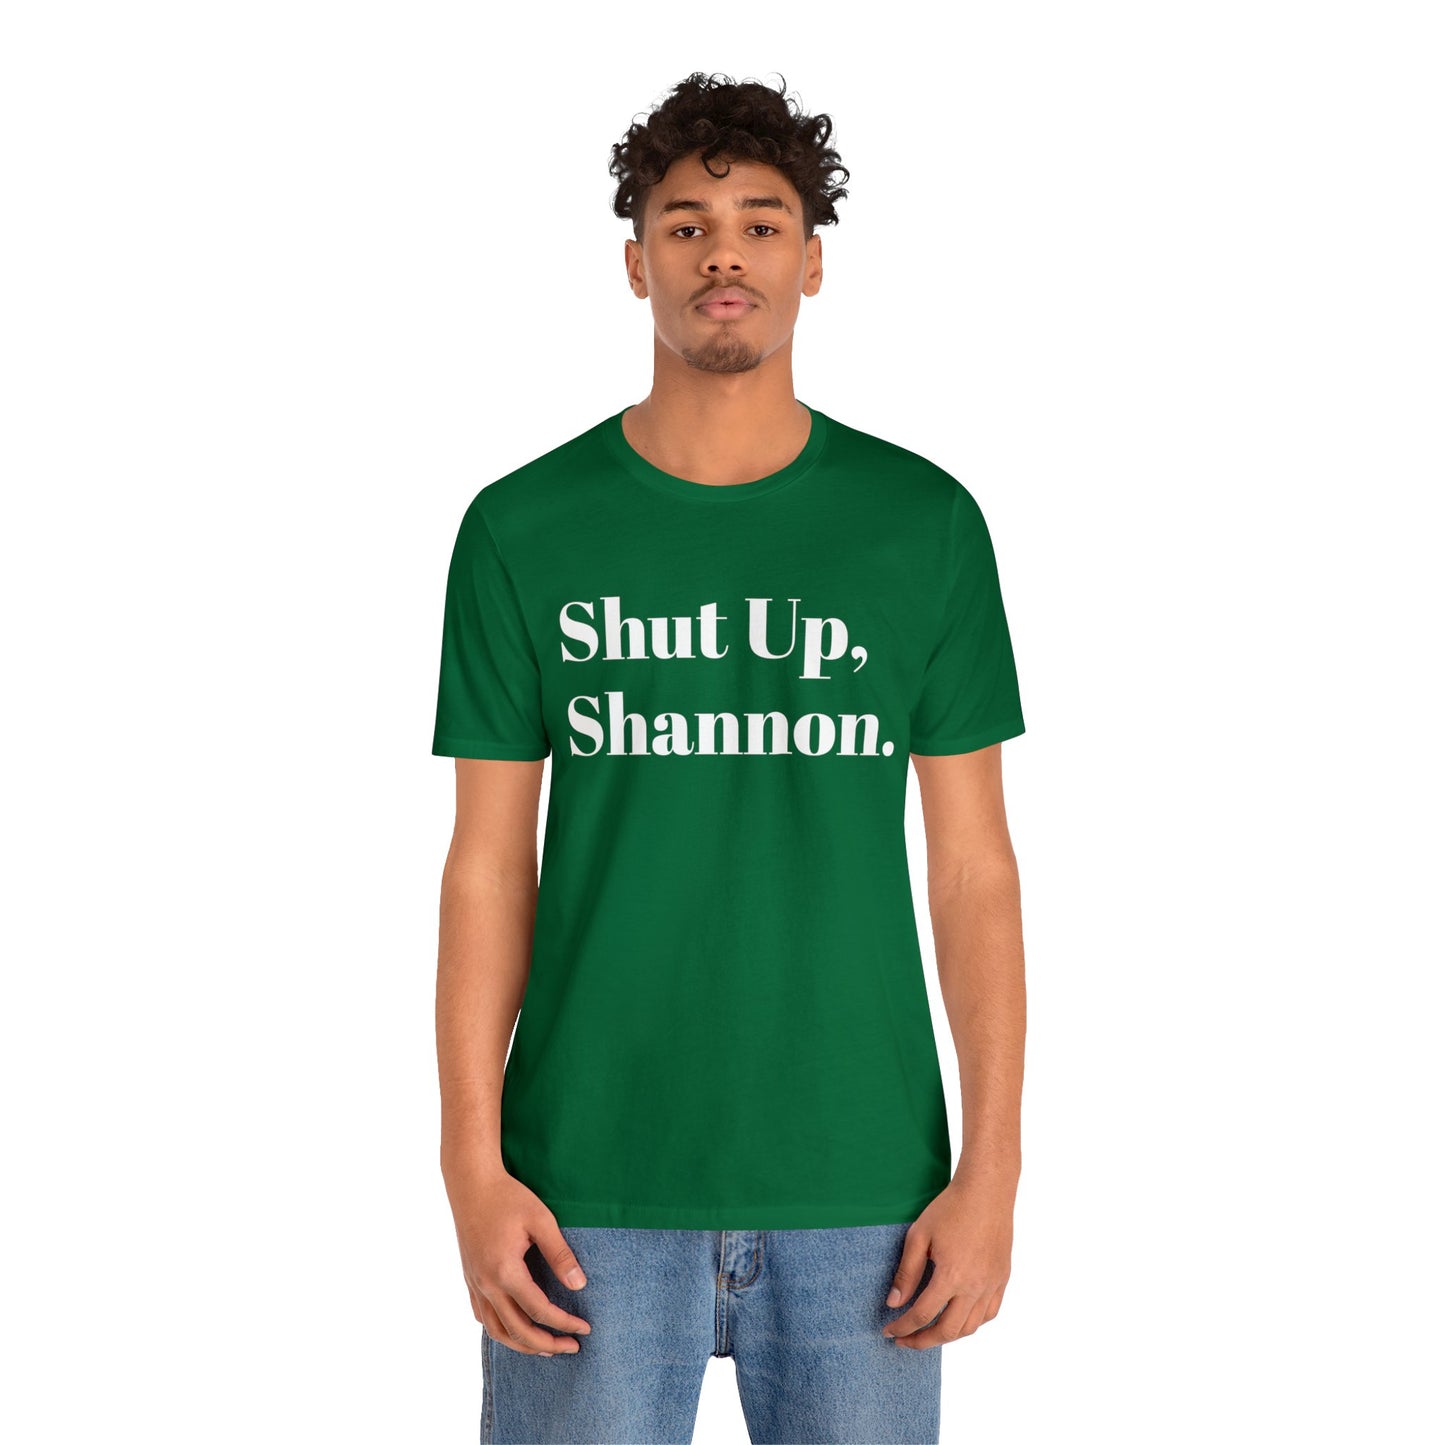 Chrisism No. 2 - Shut up, Shannon.